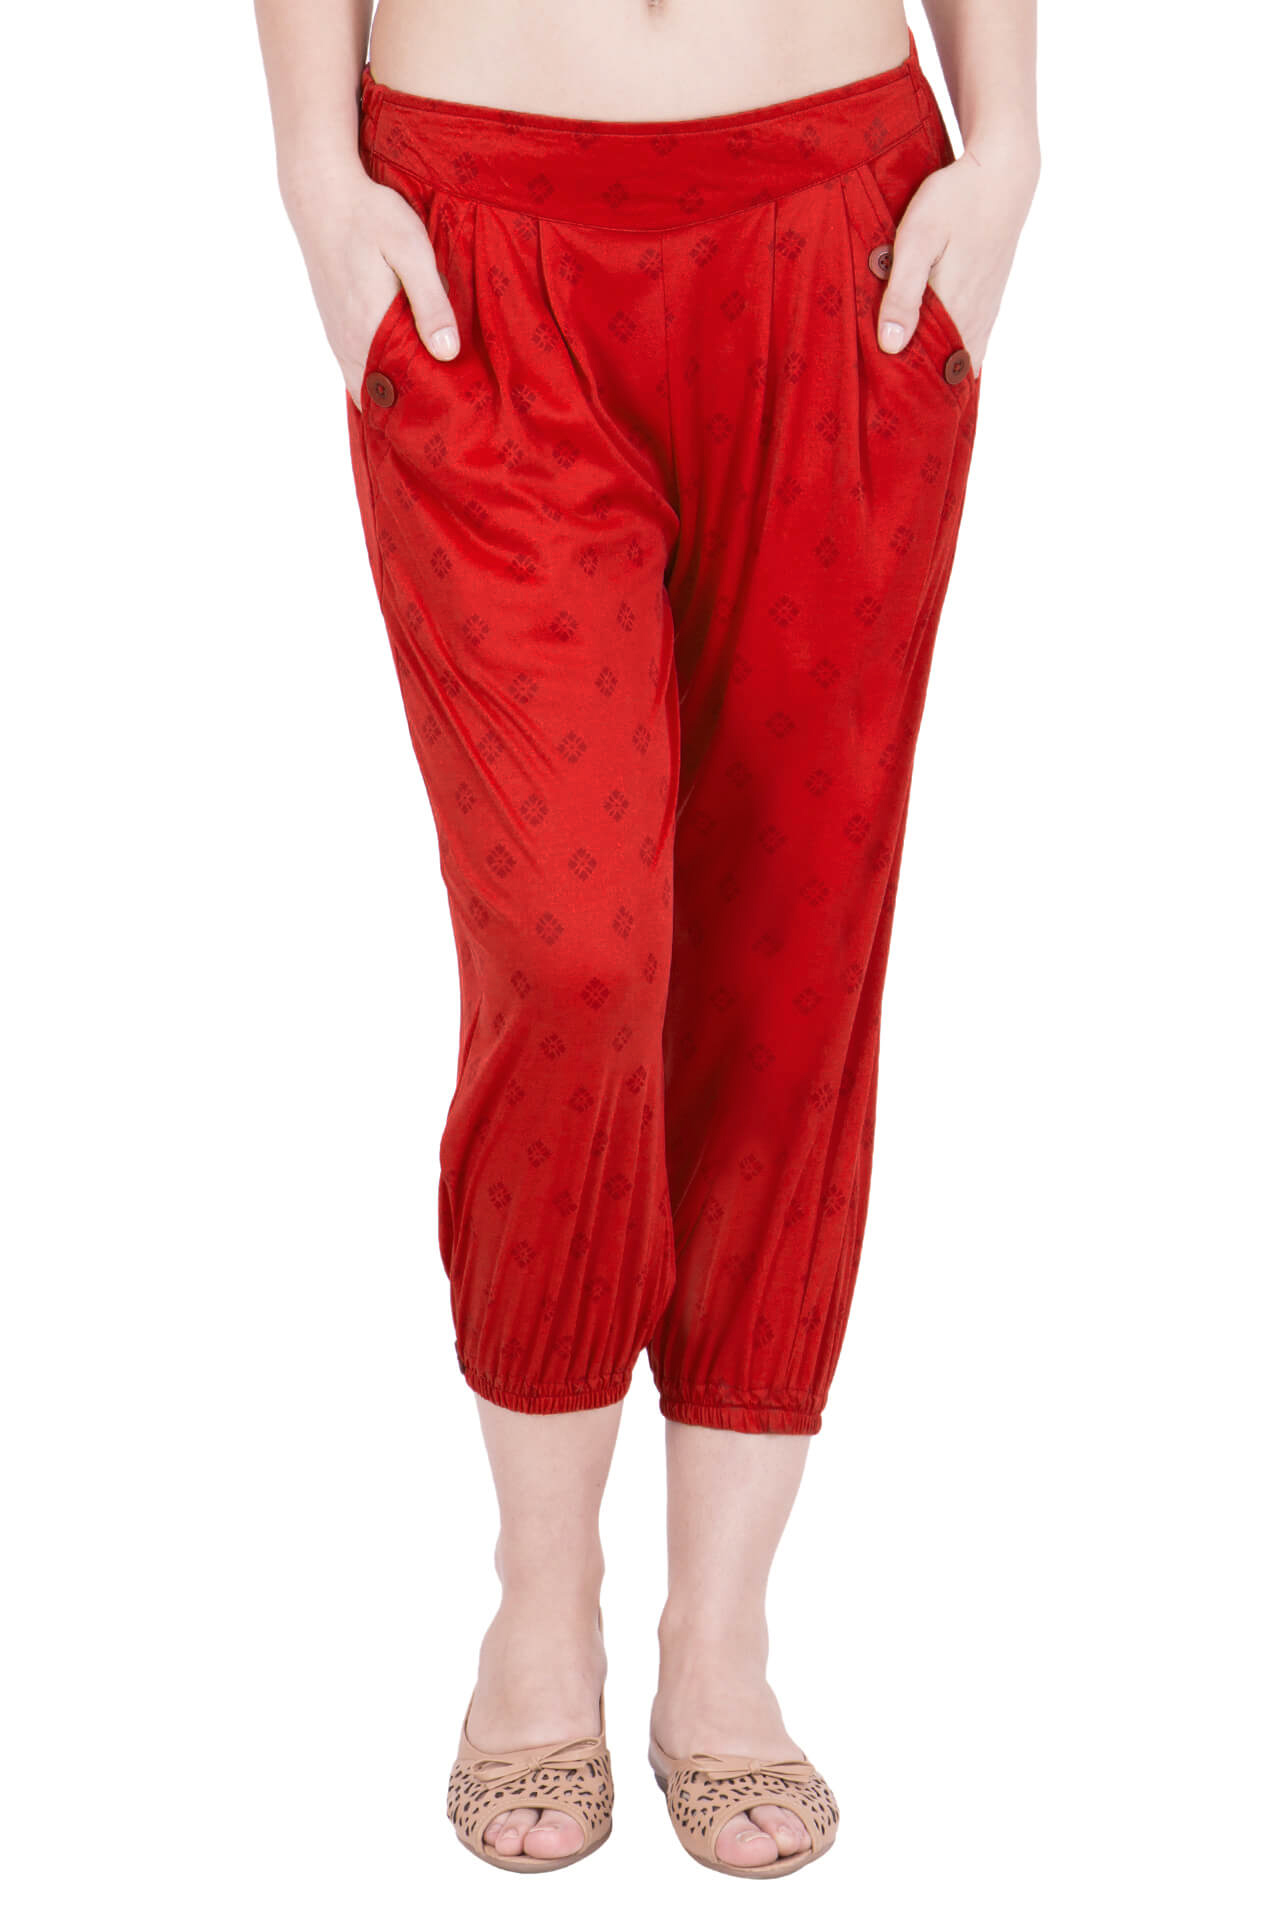 Red Capri Pants for Girls & Women – Zubix : Clothing, Accessories